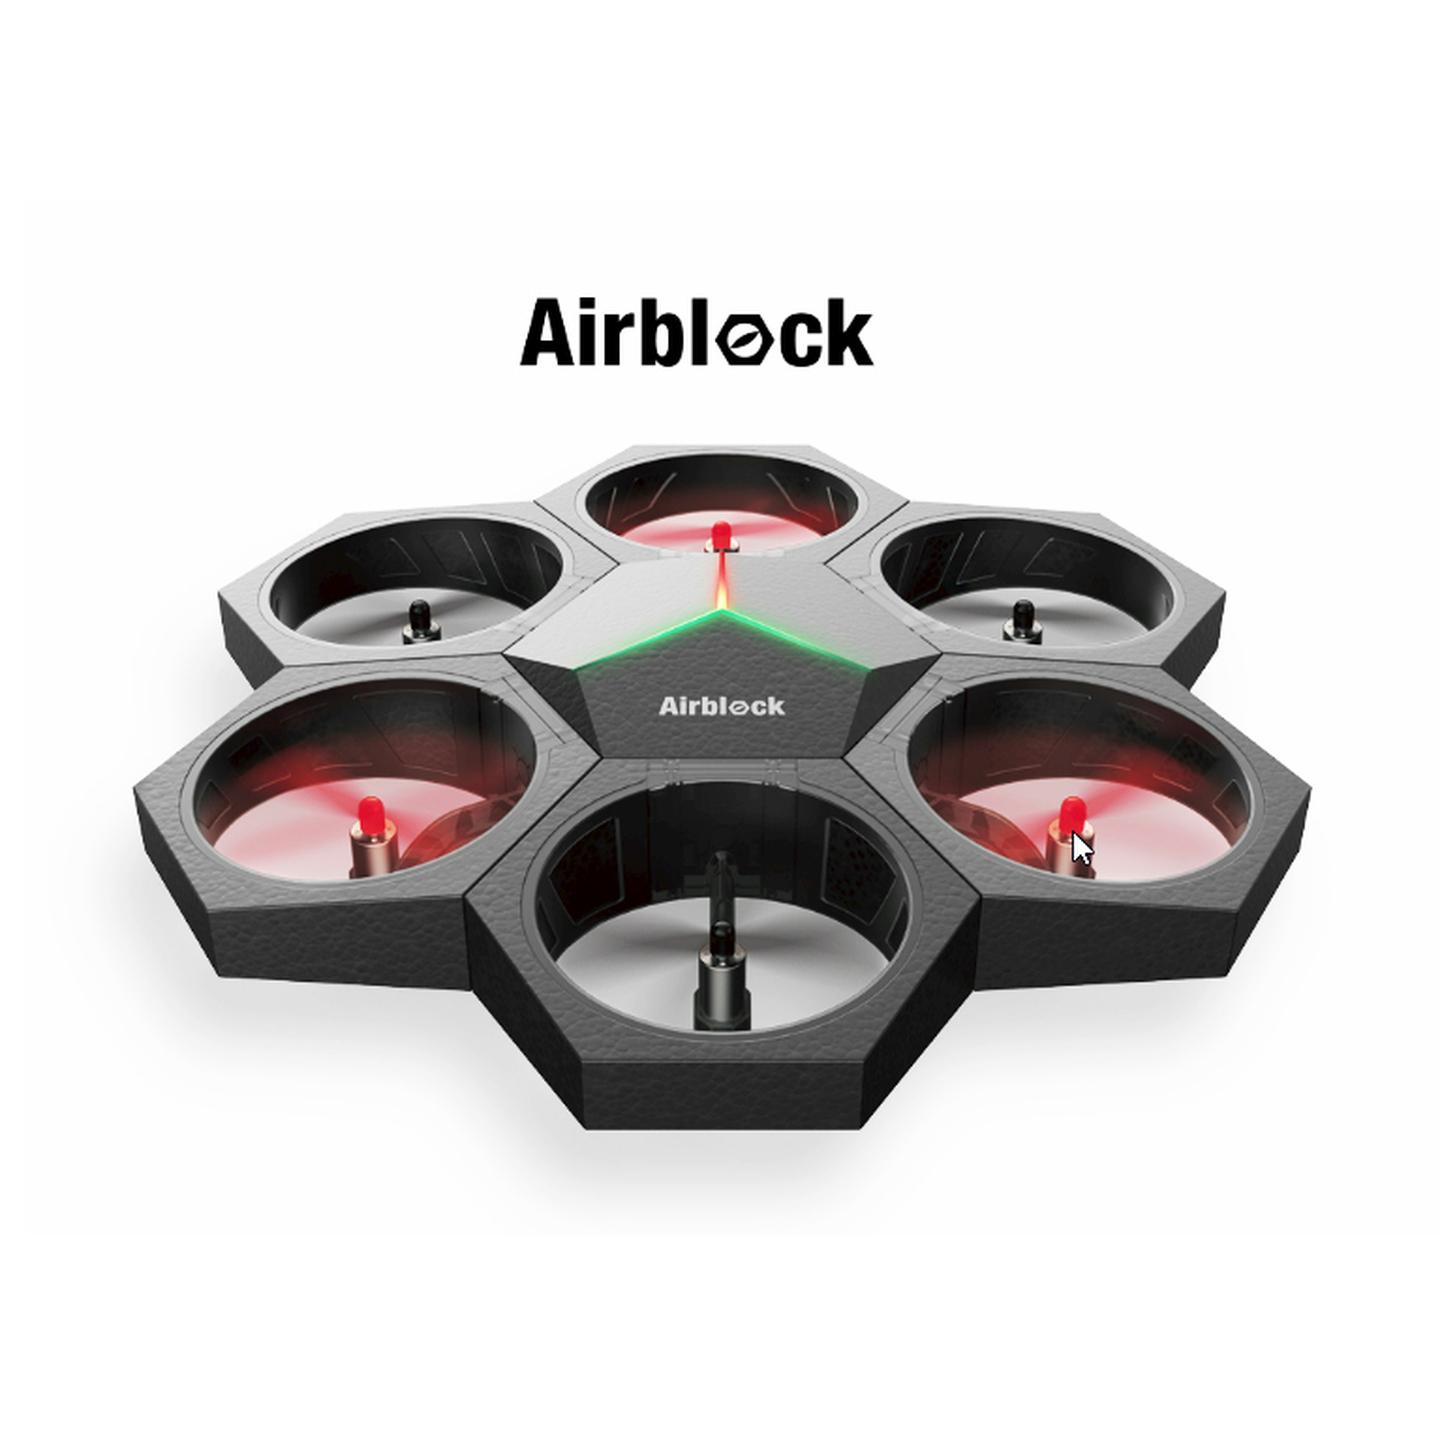 Makeblock Airblock Modular Programmable Drone Kit